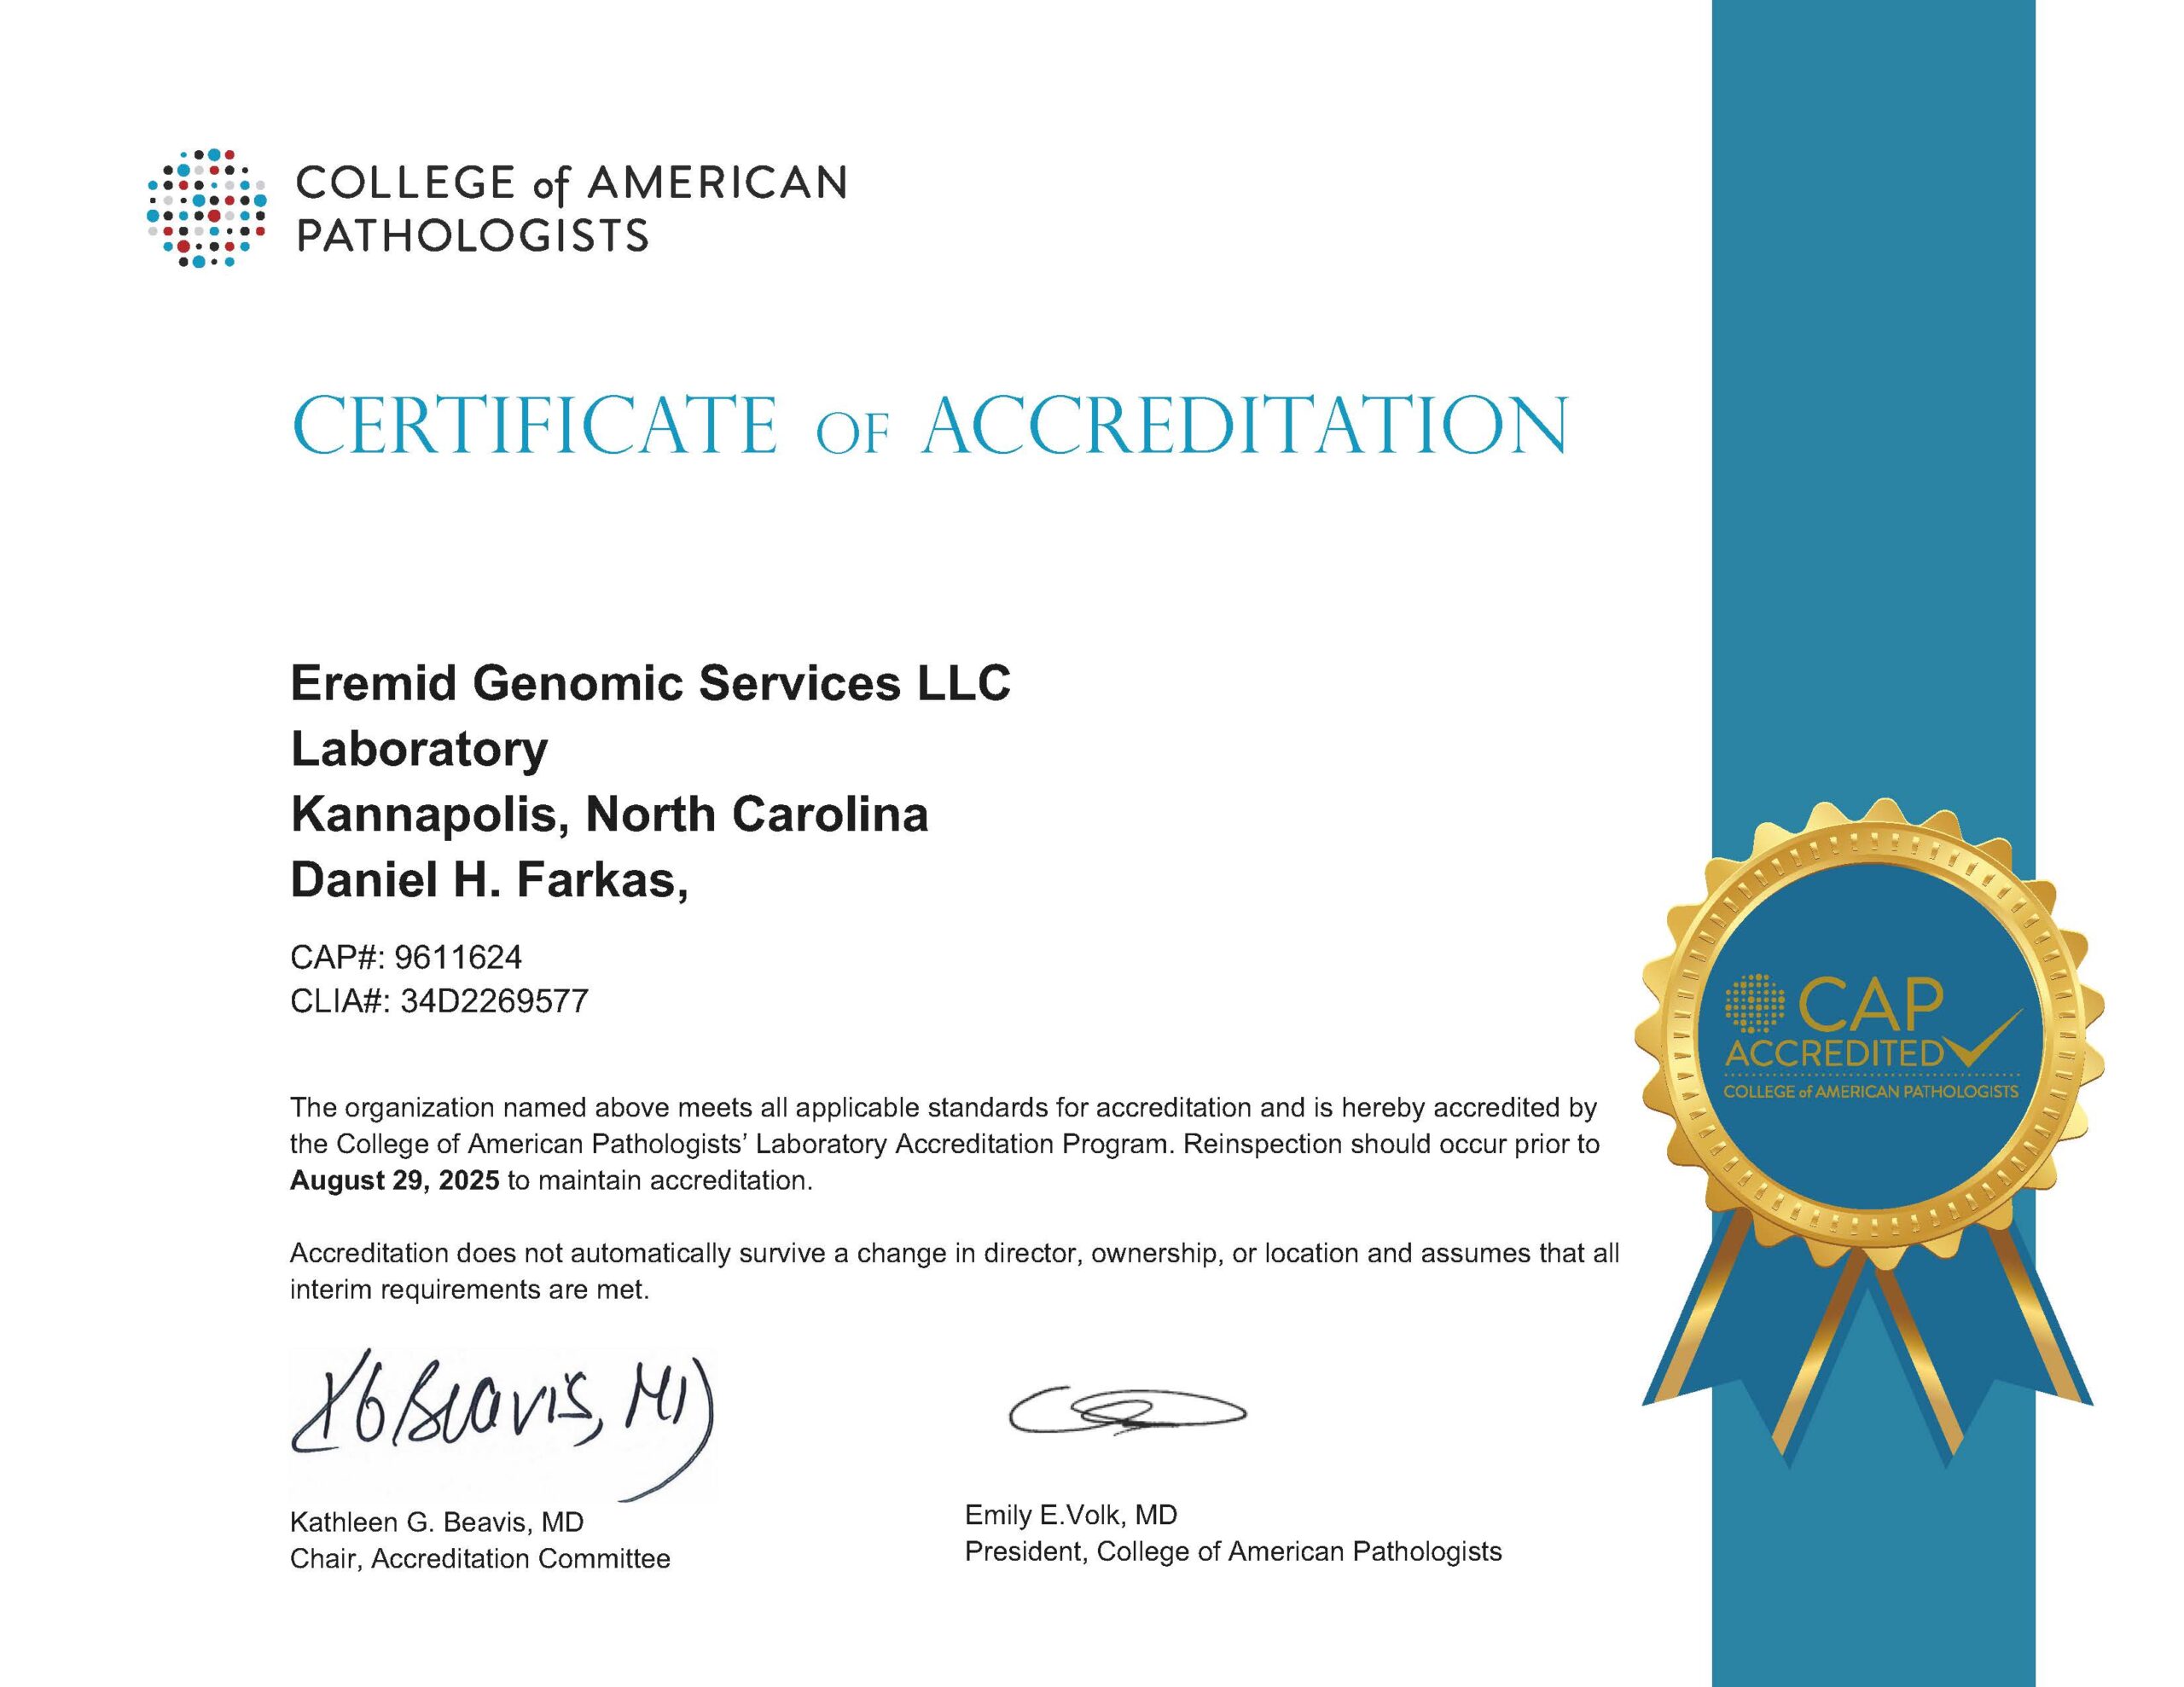 Eremid Genomic Services CAP Accreditation Certificate